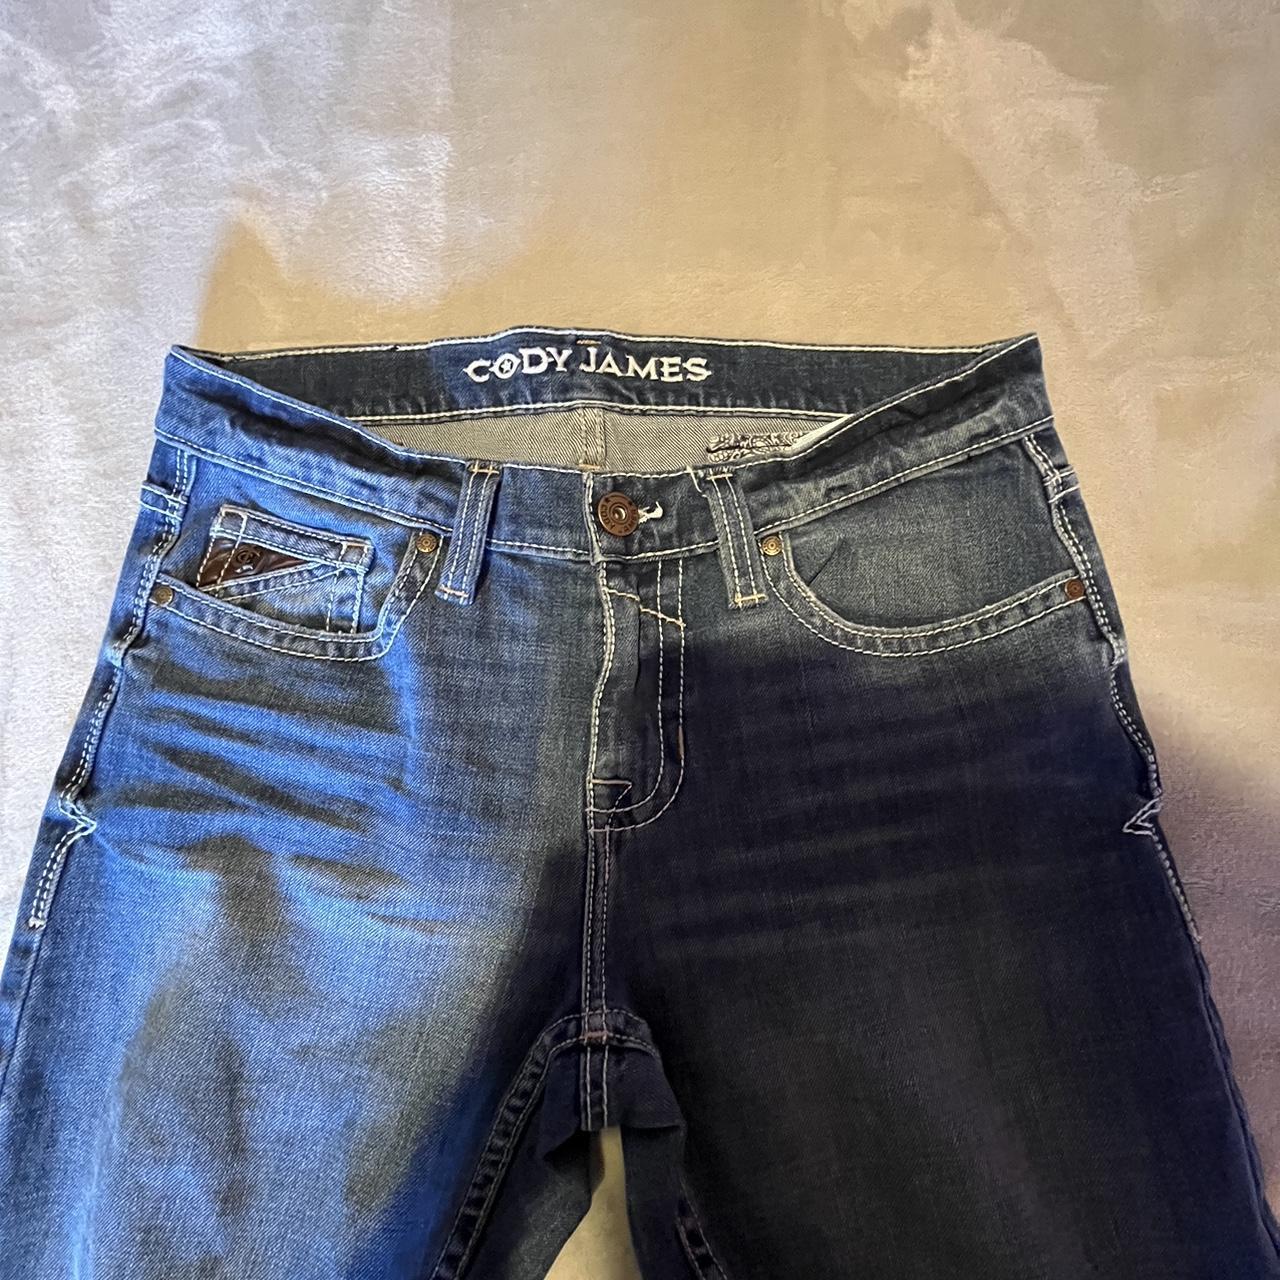 Cody James Men's Navy Jeans